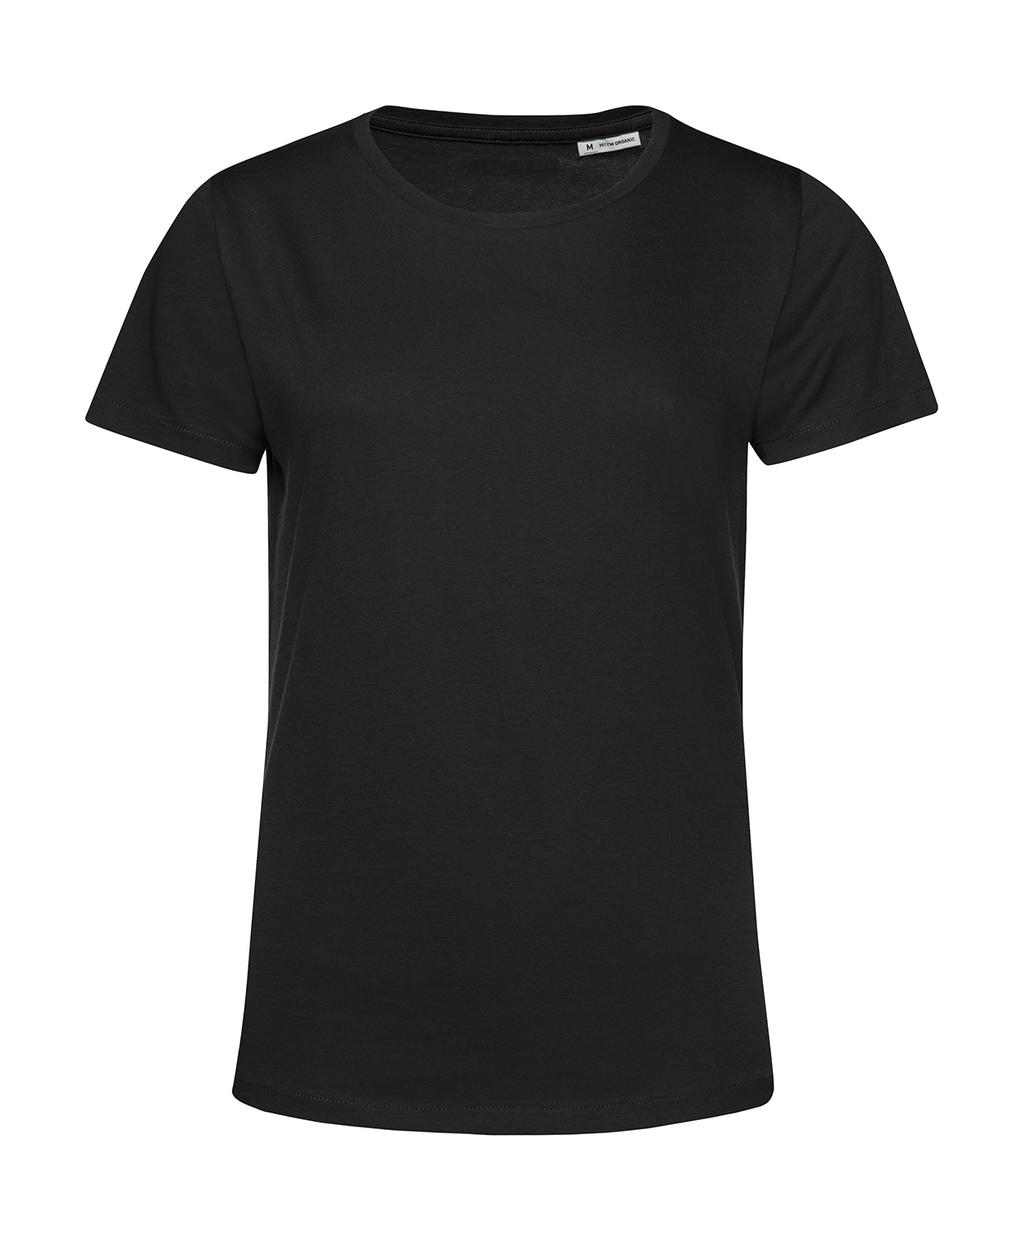 Tričko dámské BC Organic Inspire E150 - černé, 3XL